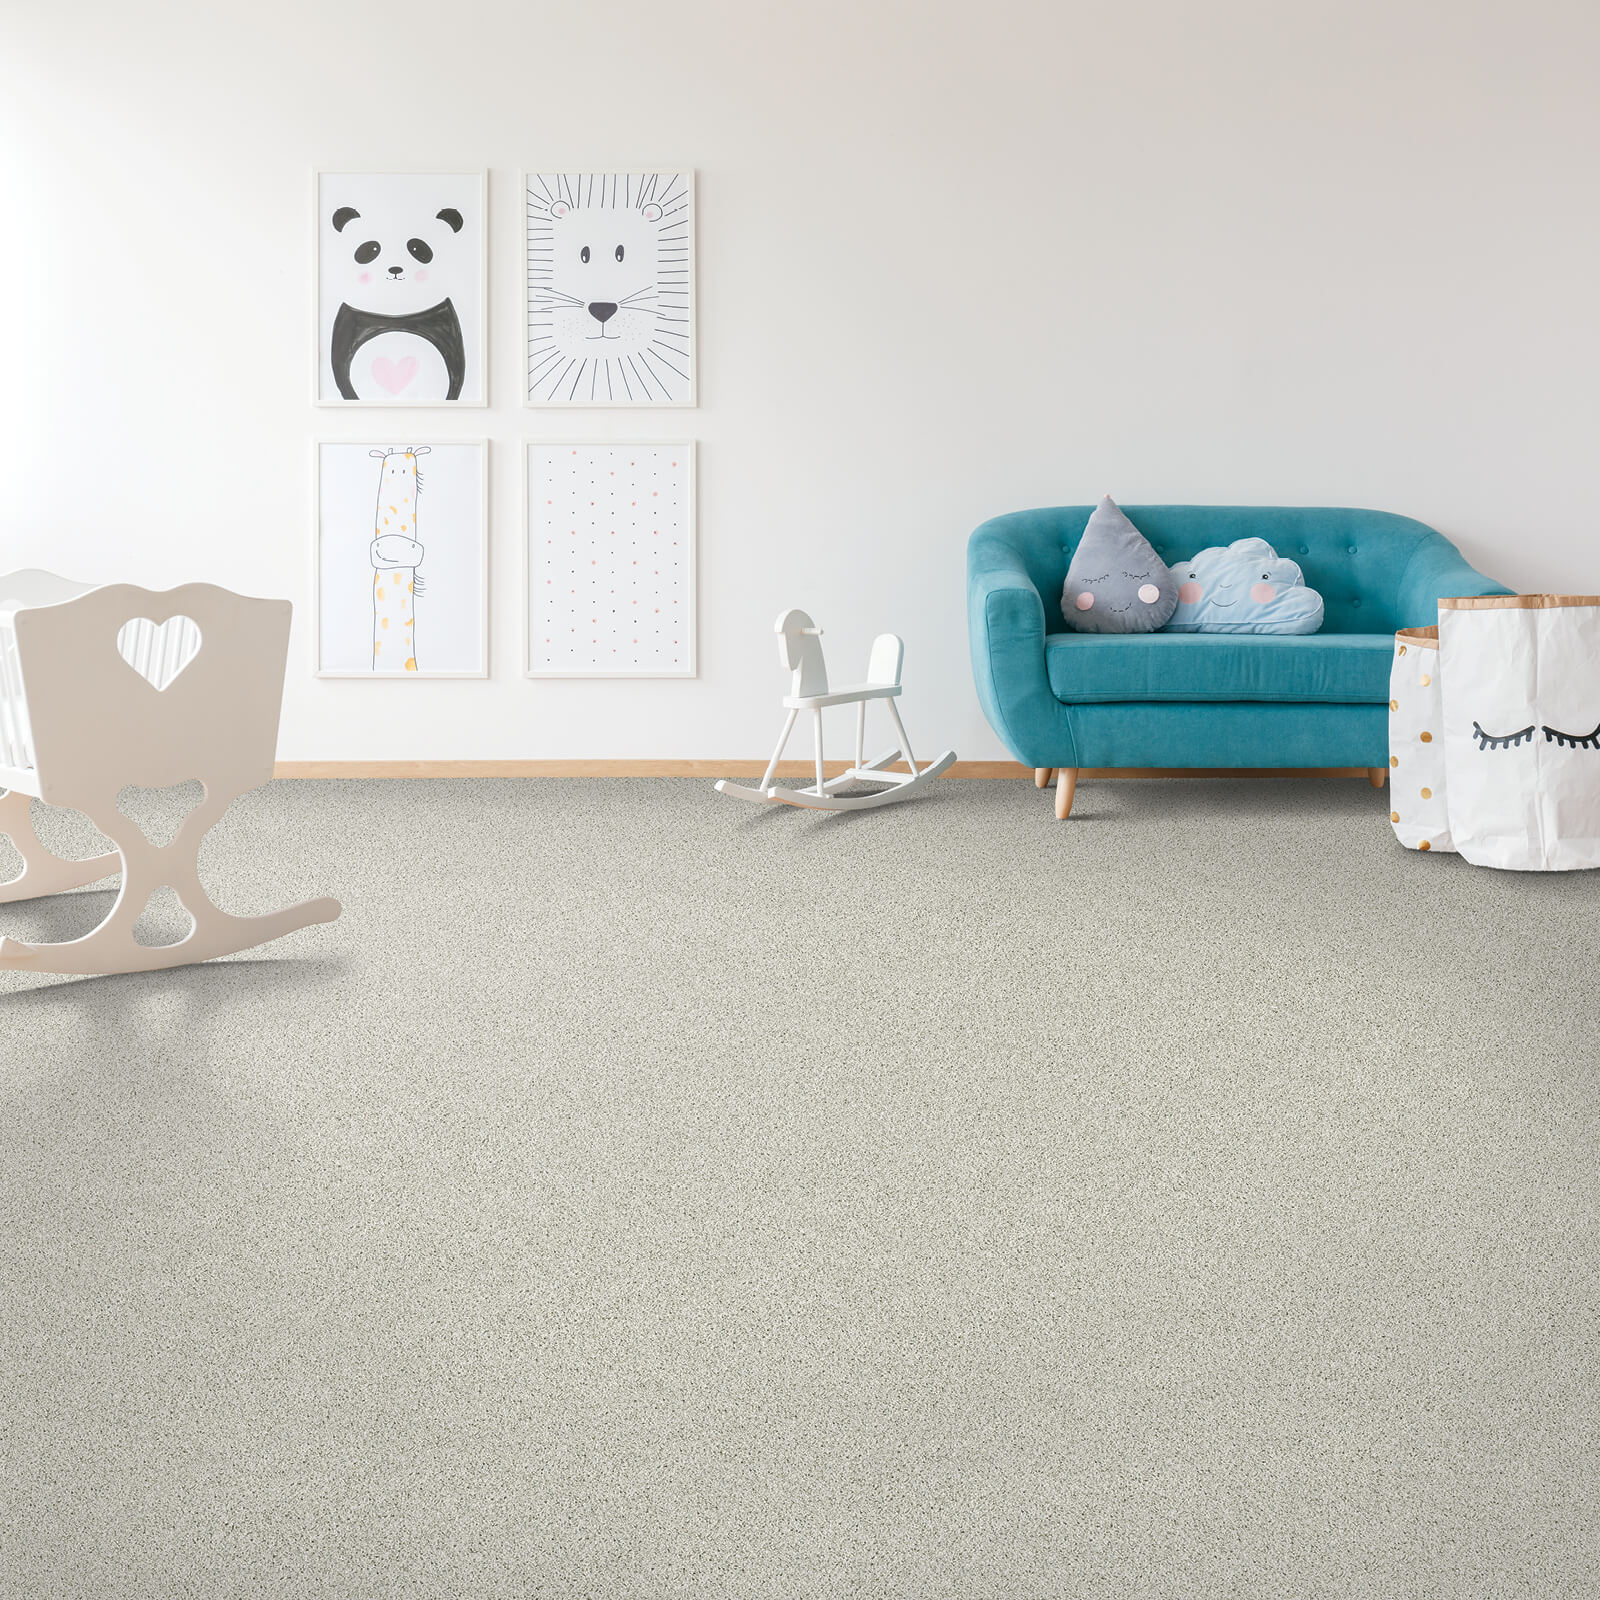 Carpet flooring | Kelly's Carpet & Furniture